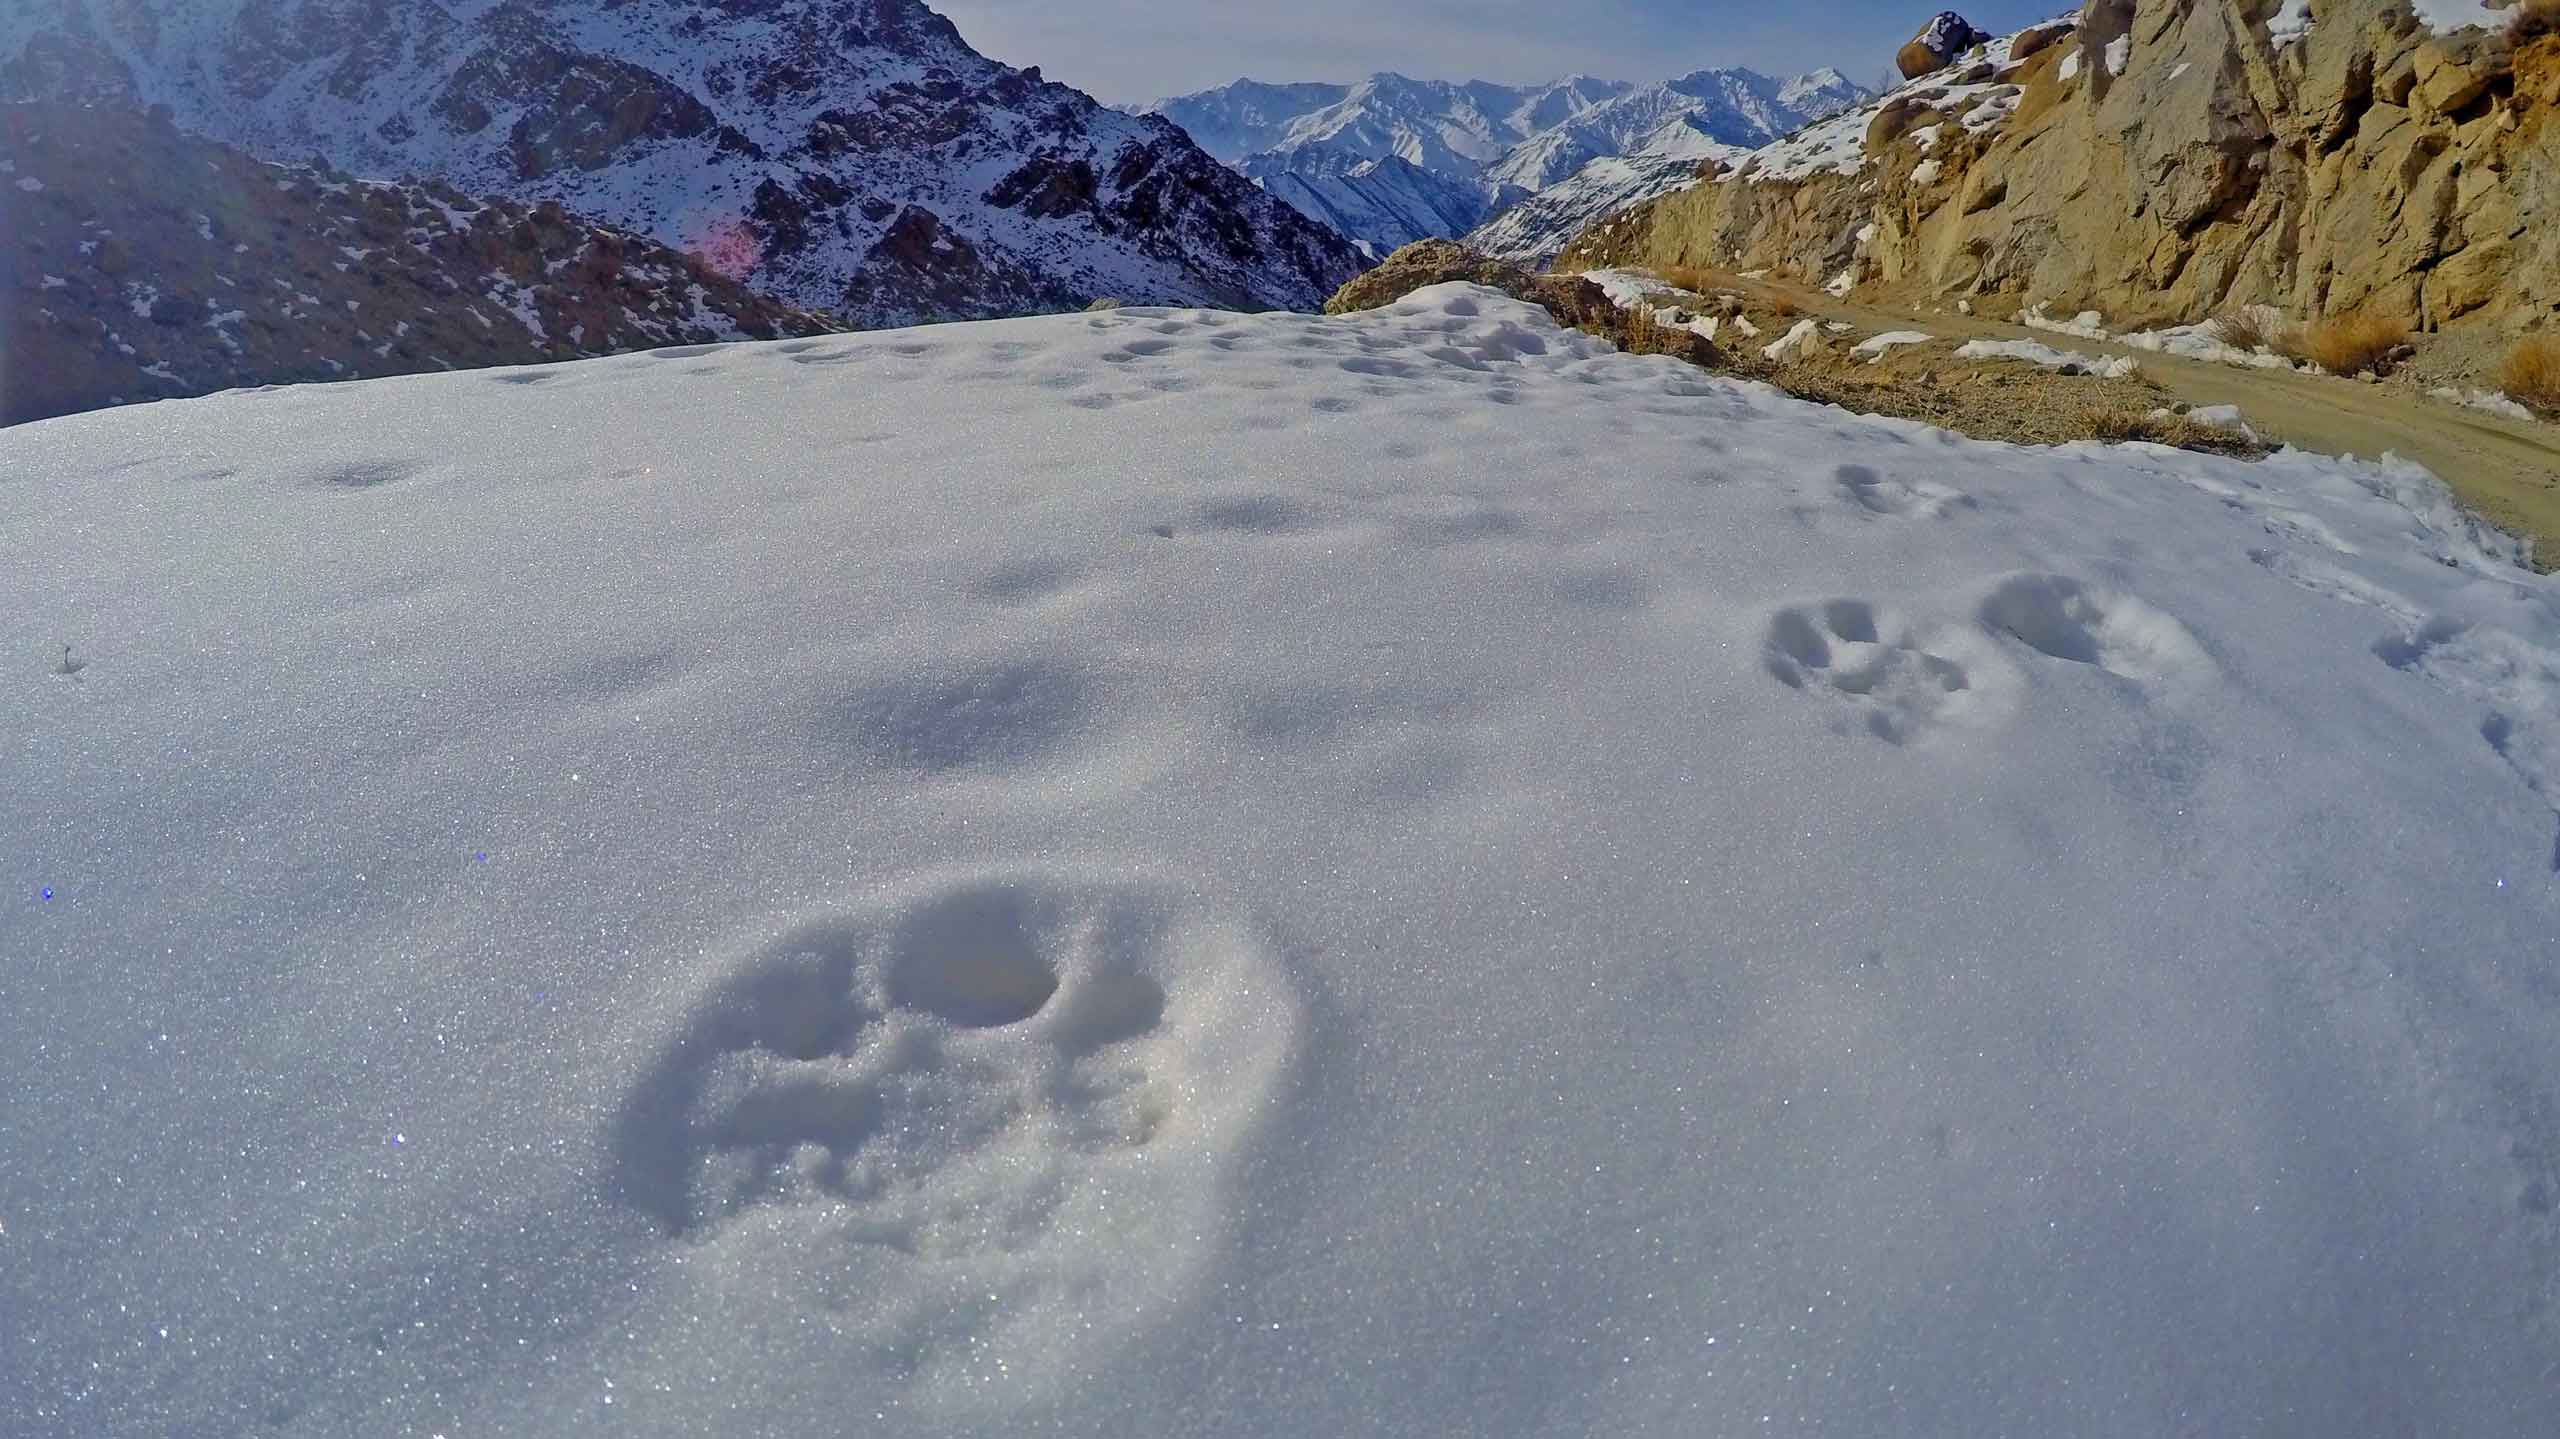 Snow leopard tracks in Ladakh, India